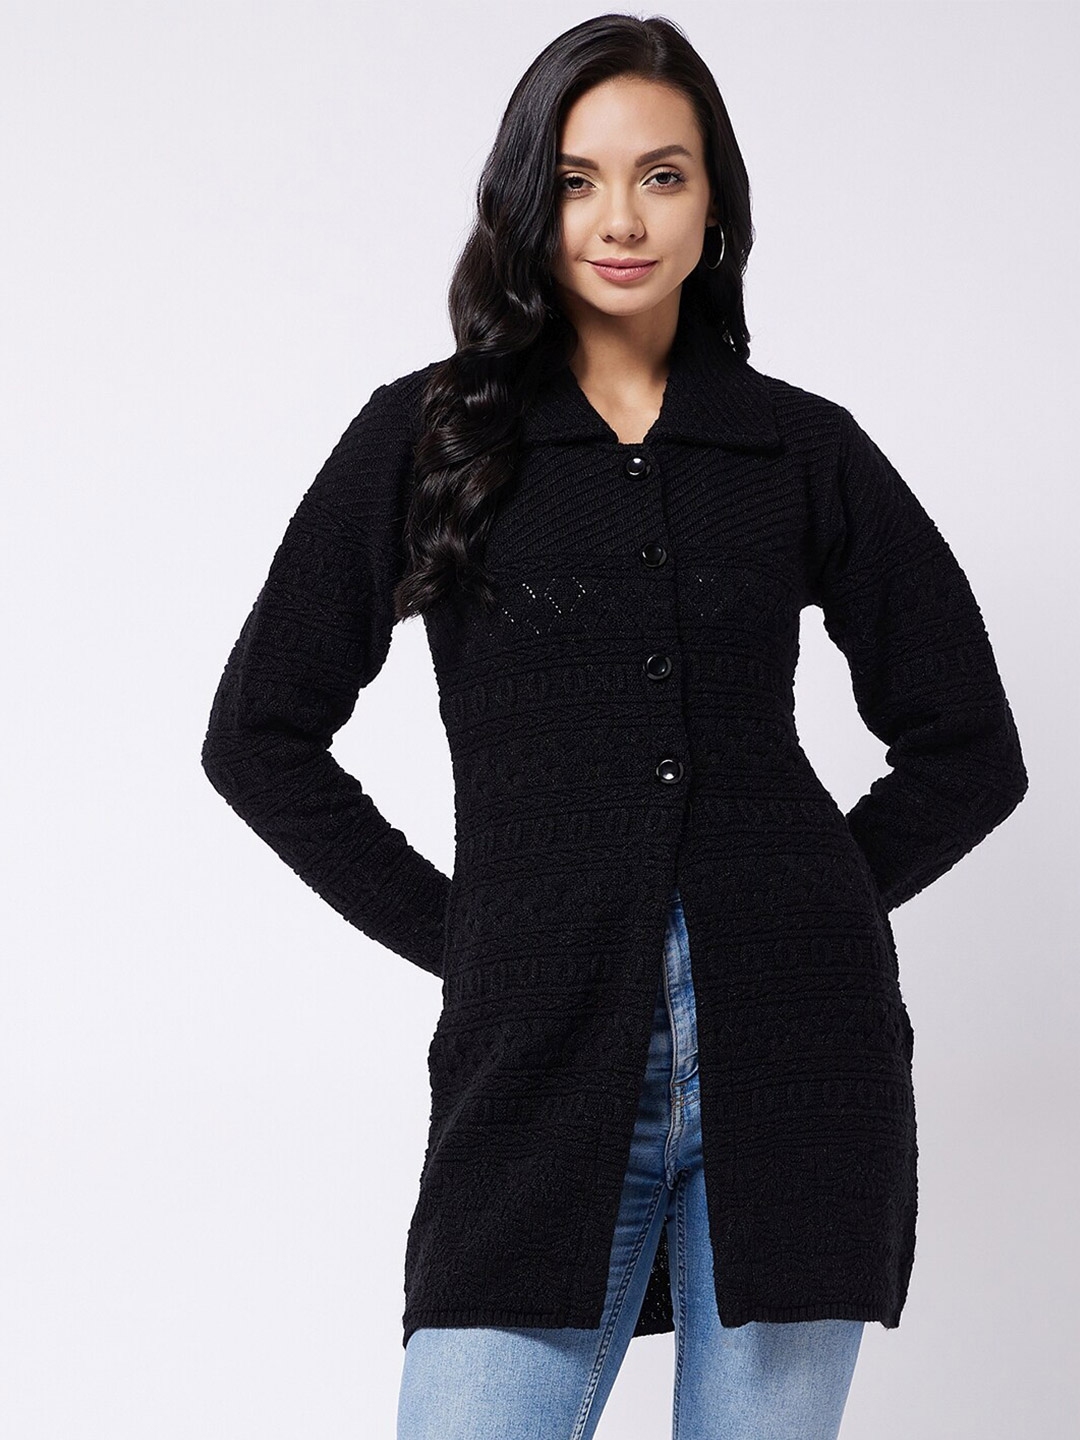 Buy RIVZA Women Black Cable Knit Acrylic Ethnic Cardigan Sweater ...